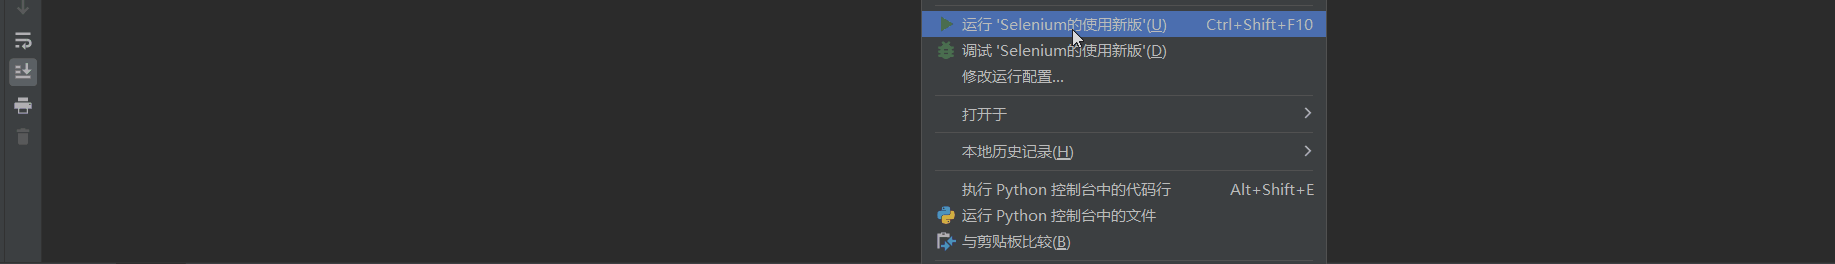 Python爬虫之Web自动化测试工具Selenium&&Chrome handless